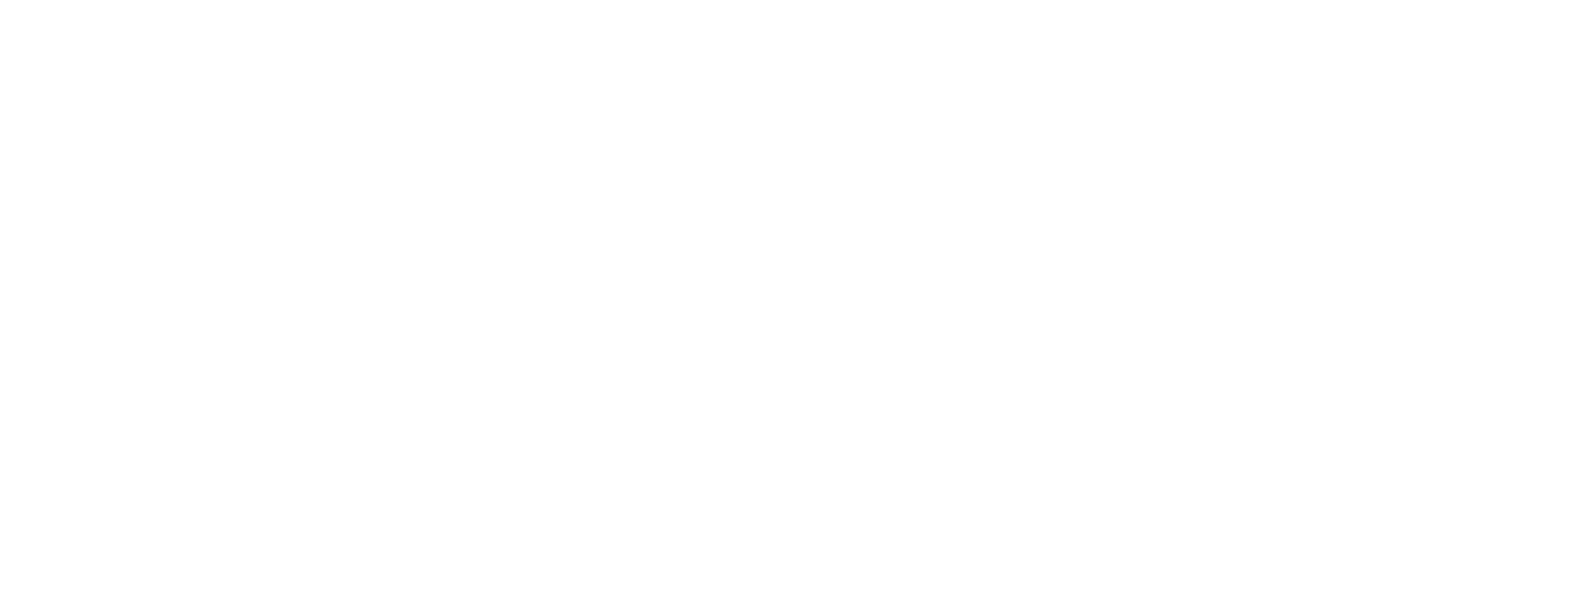 Addition Building & Design, inc